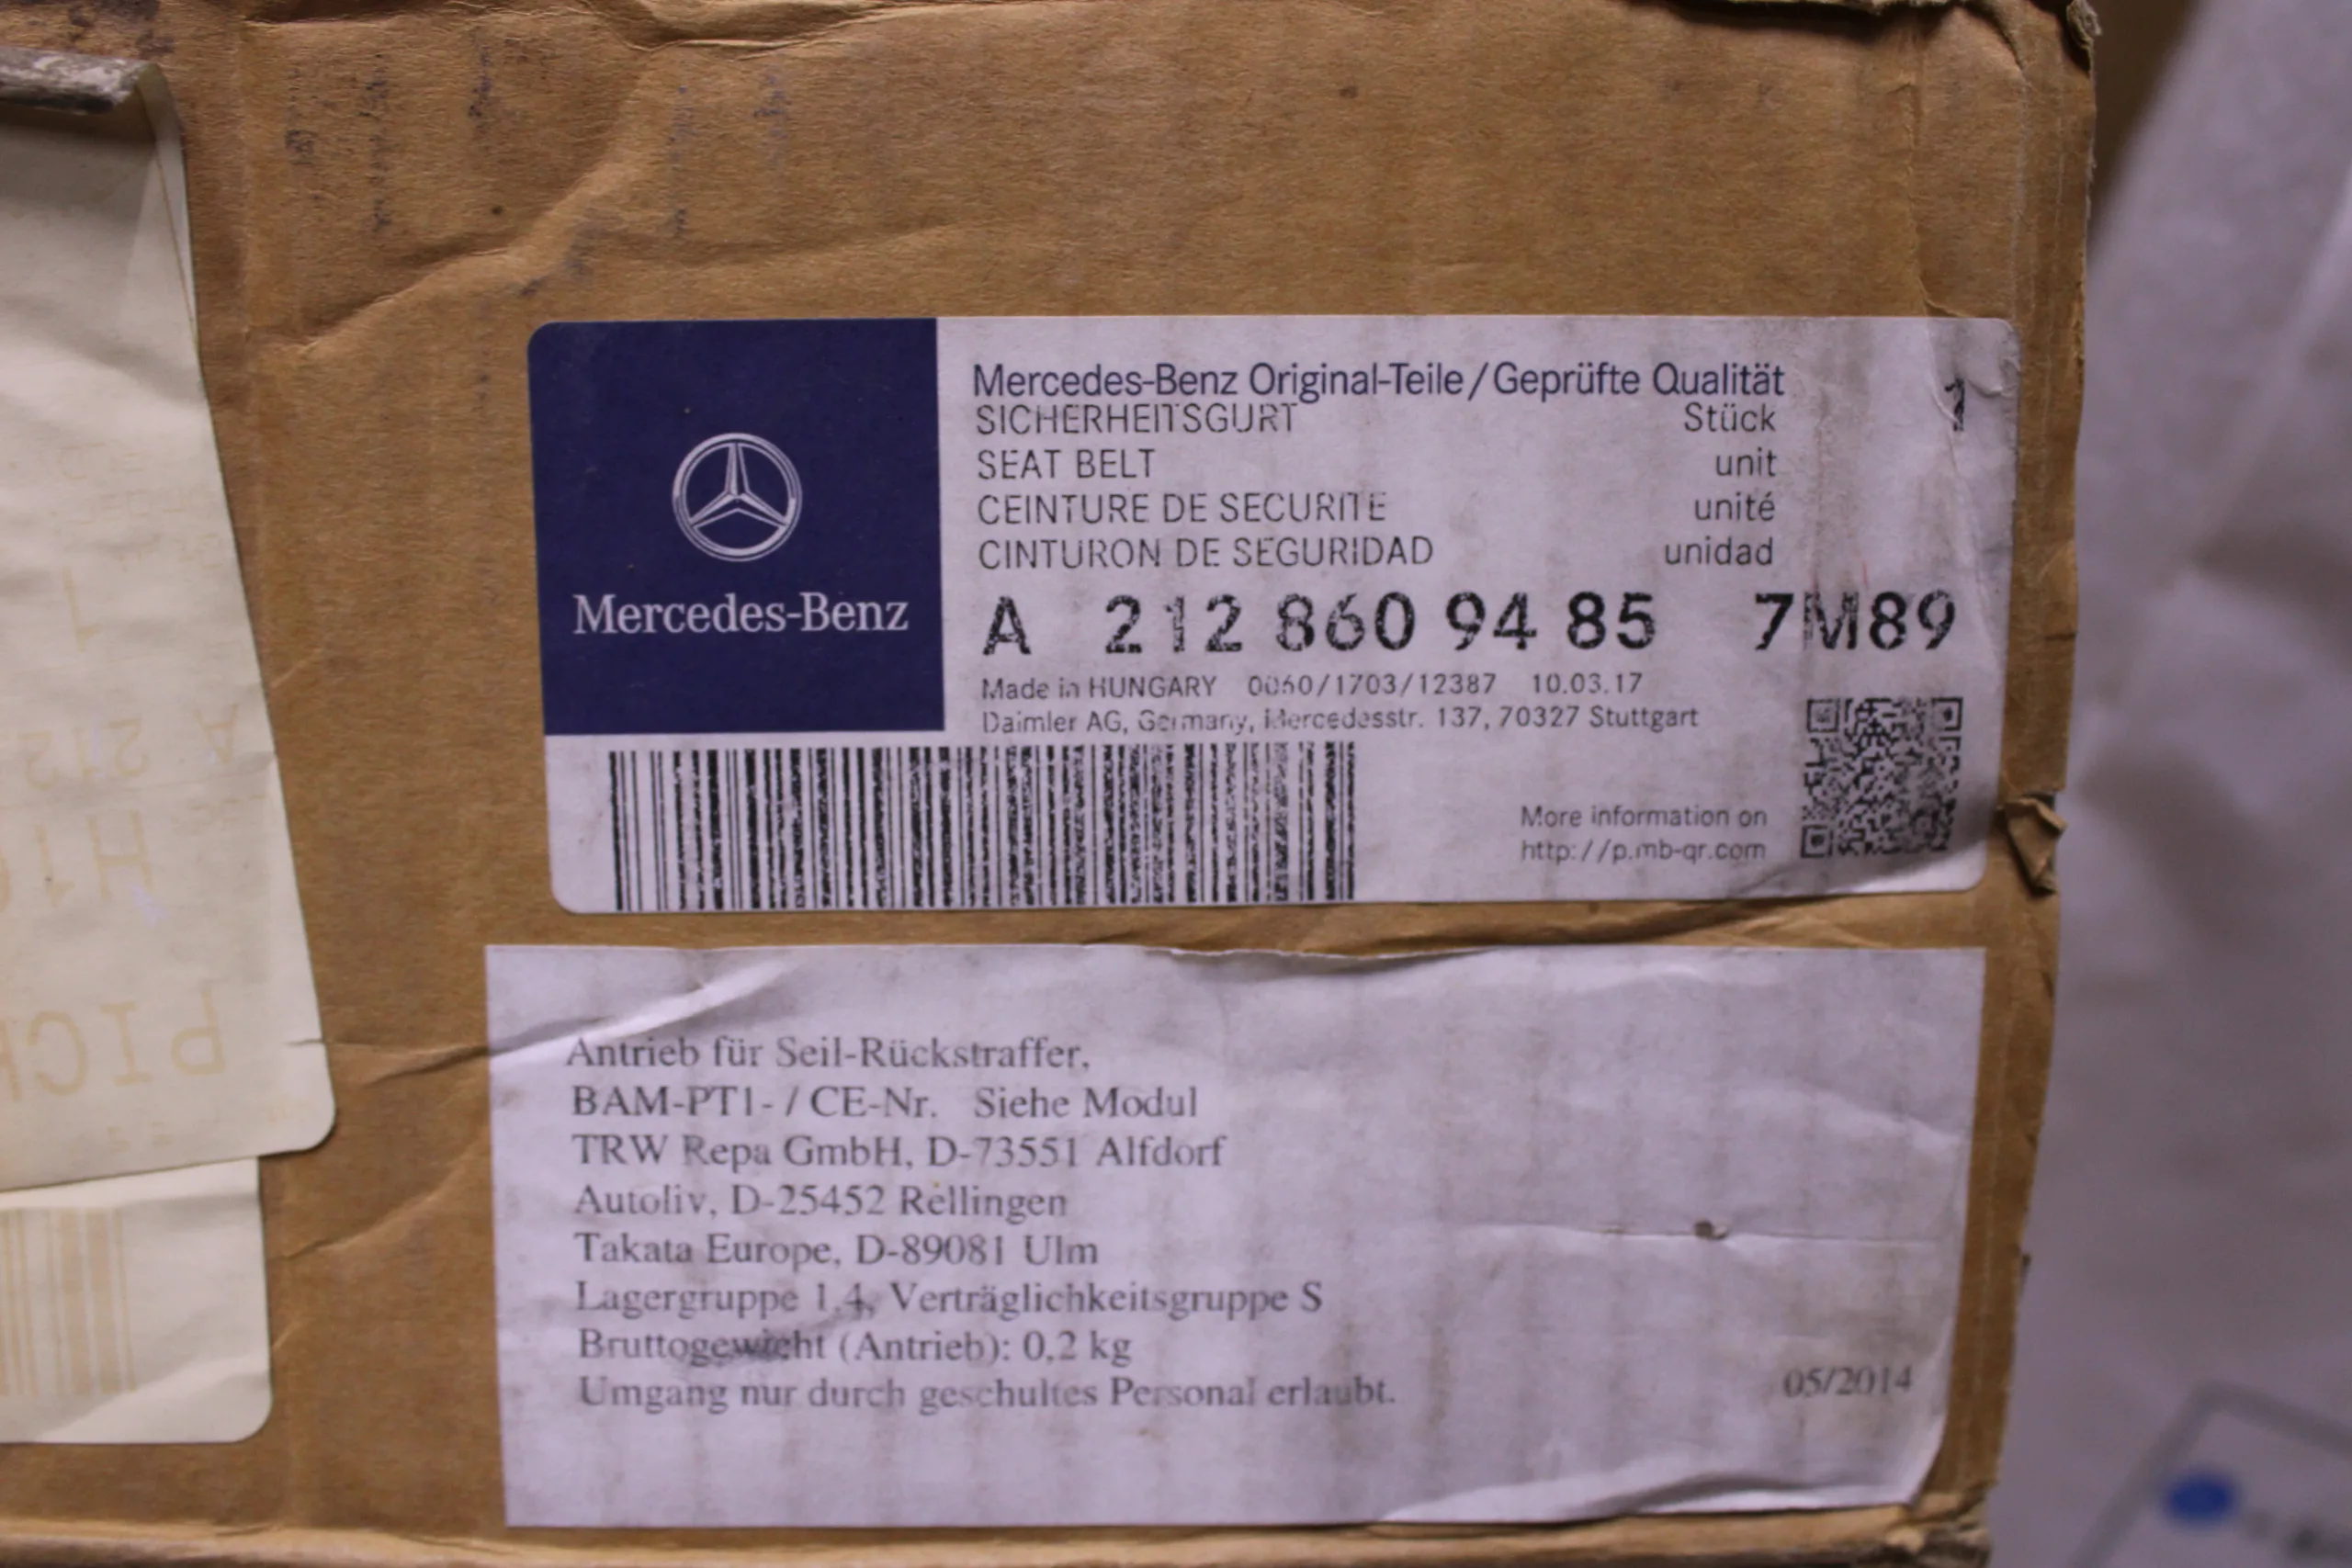 Mercedes Benz Seat Belt 21286094857M89